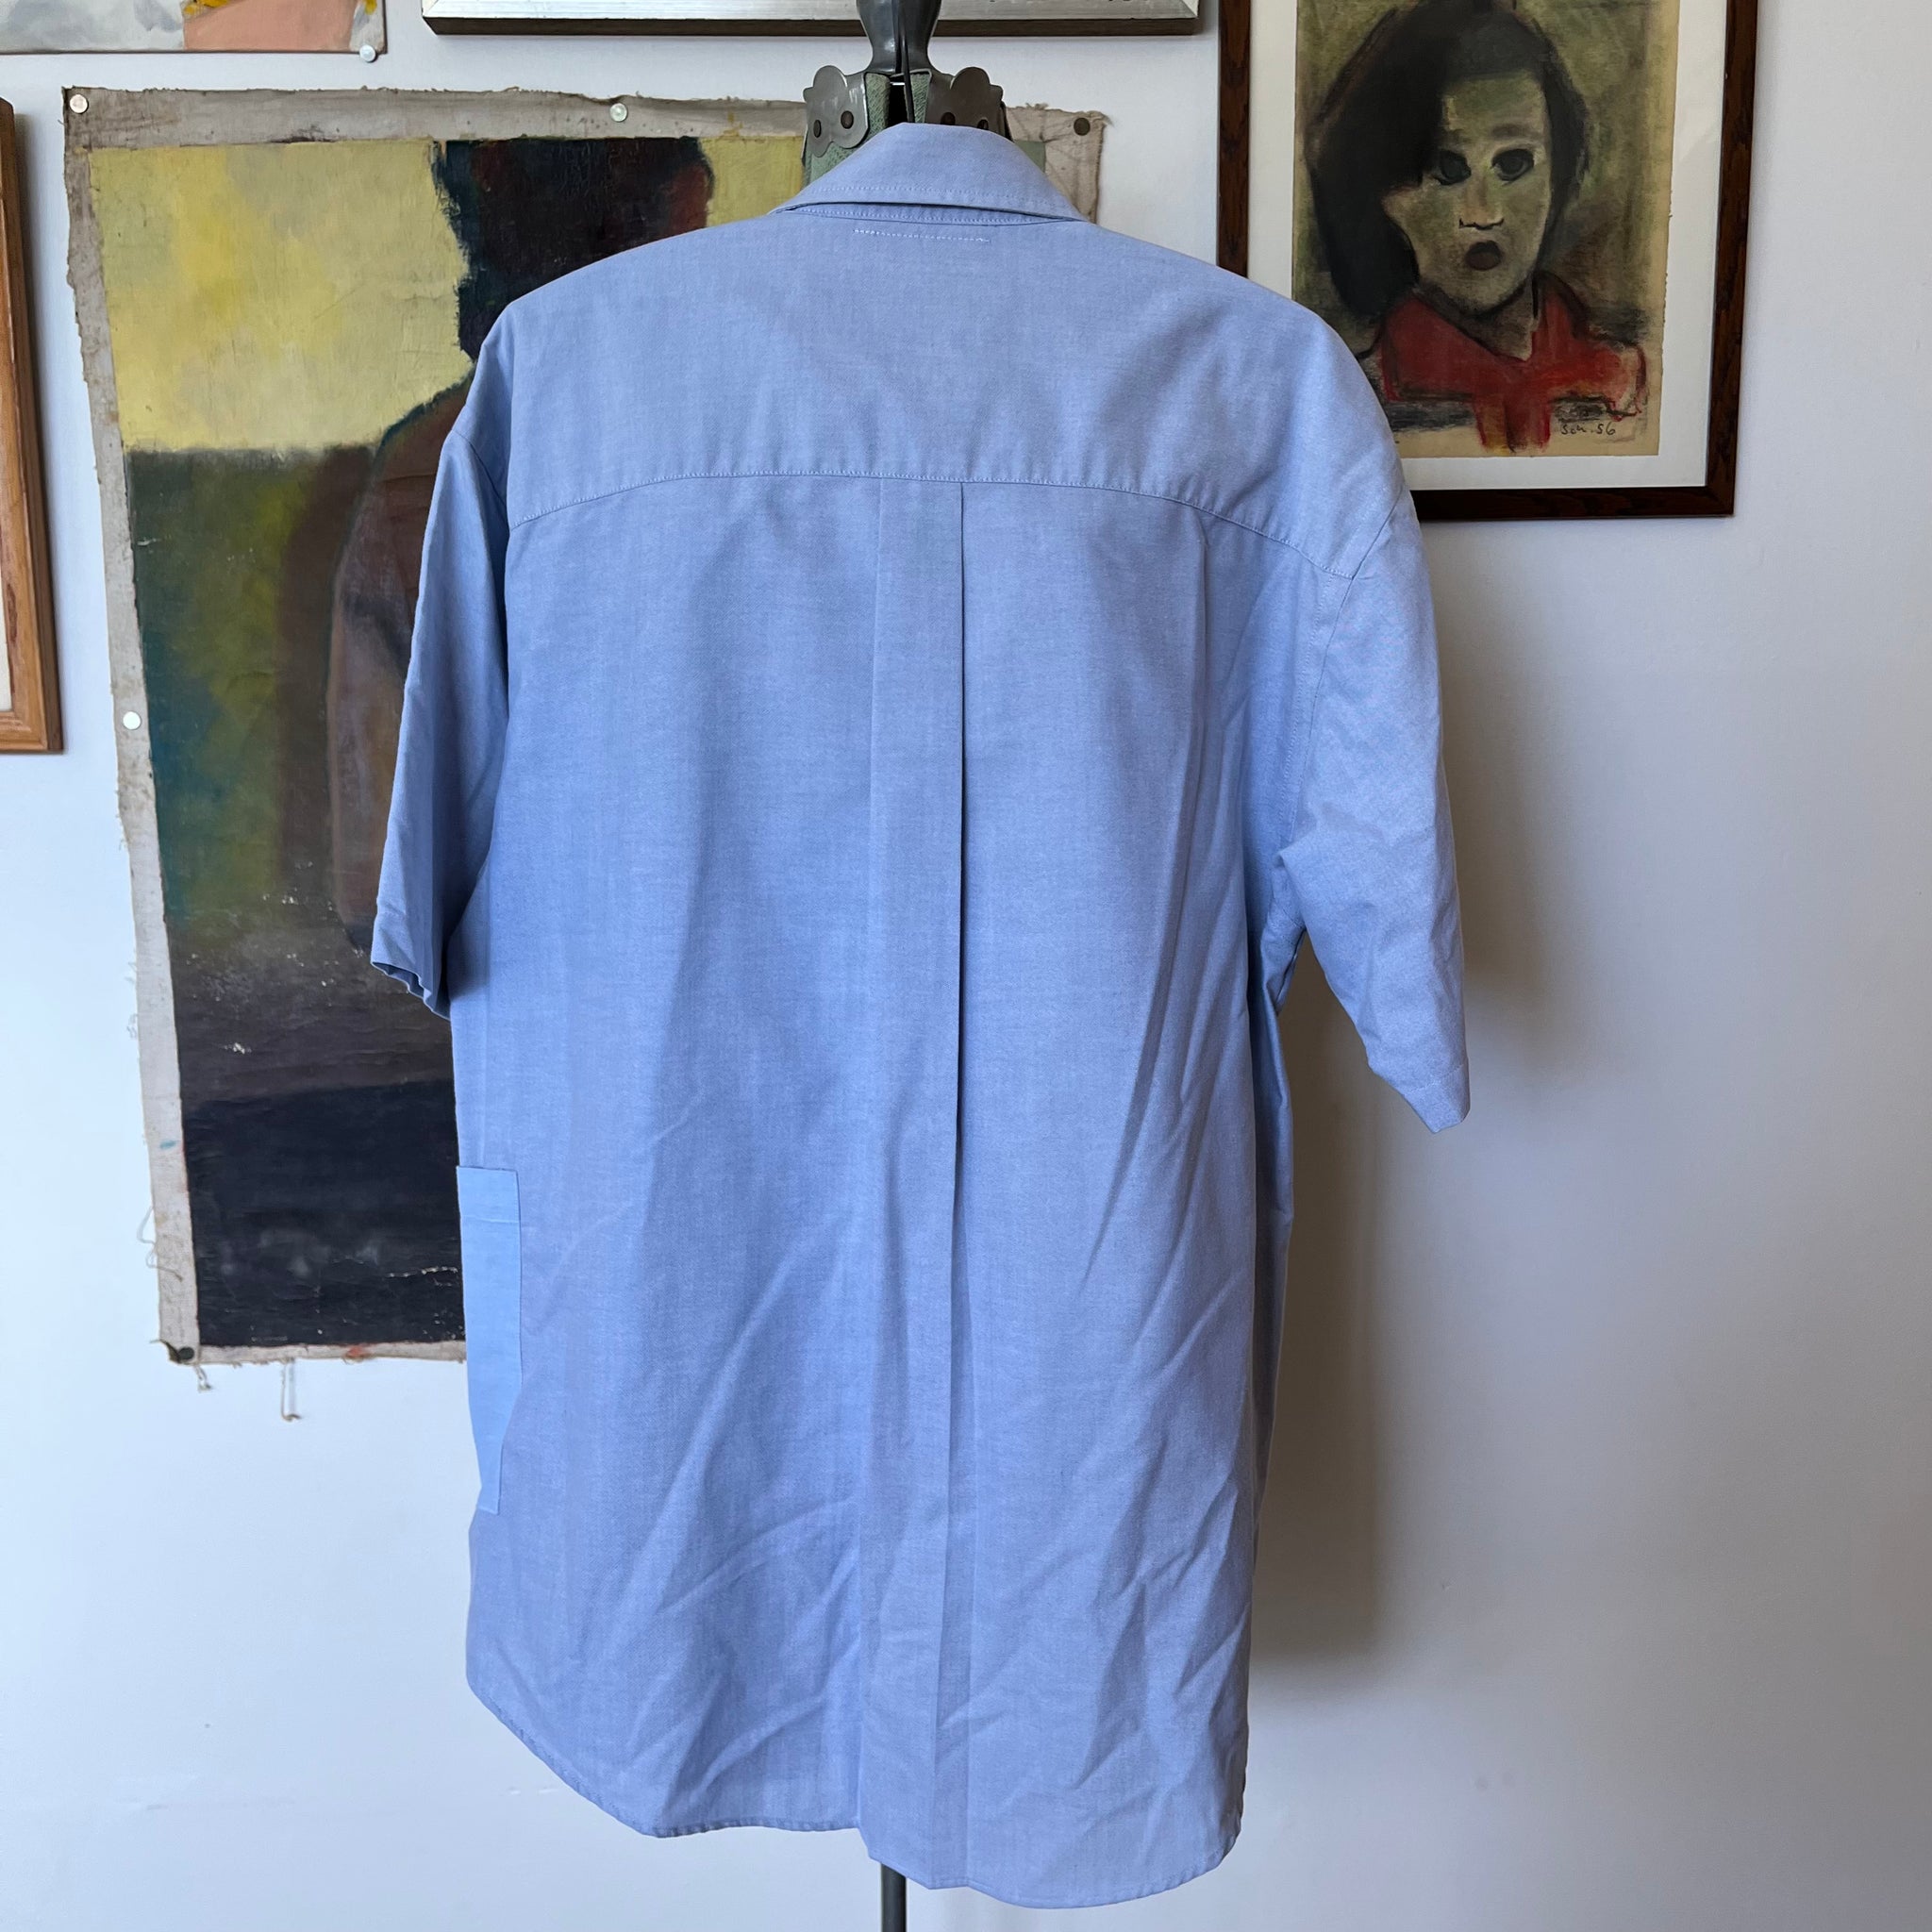 Pocket Shirt - Blue Oxford